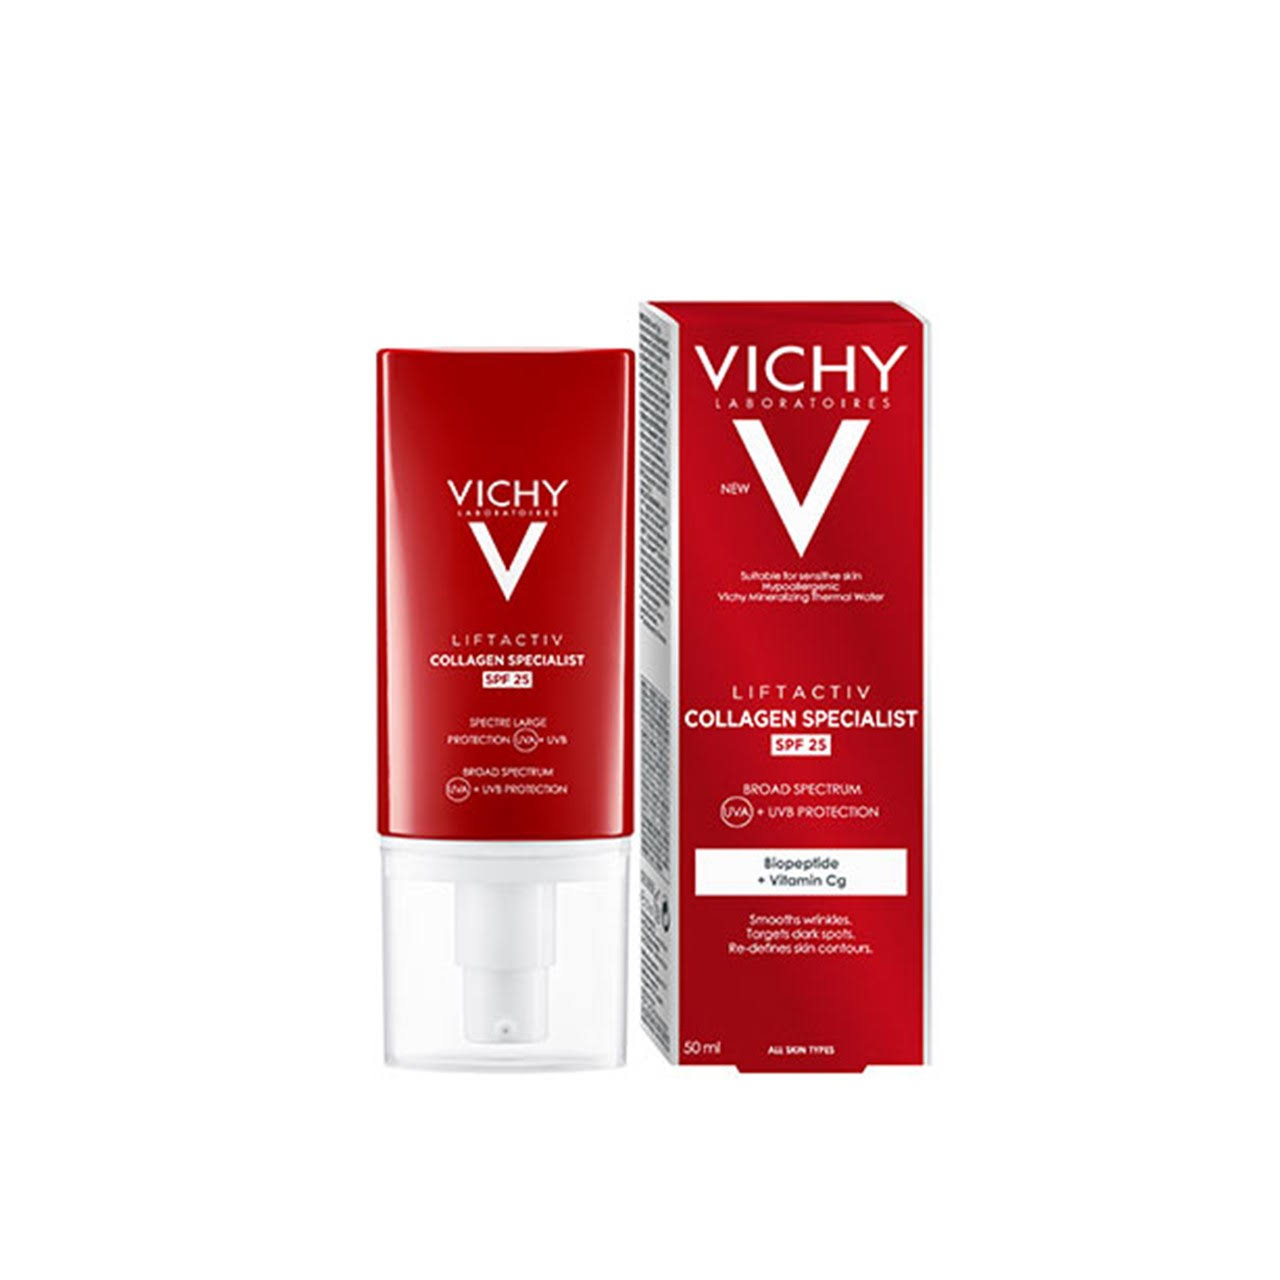 Vichy LiftActiv Collagen Specialist SPF 25 Fluid - 50ml